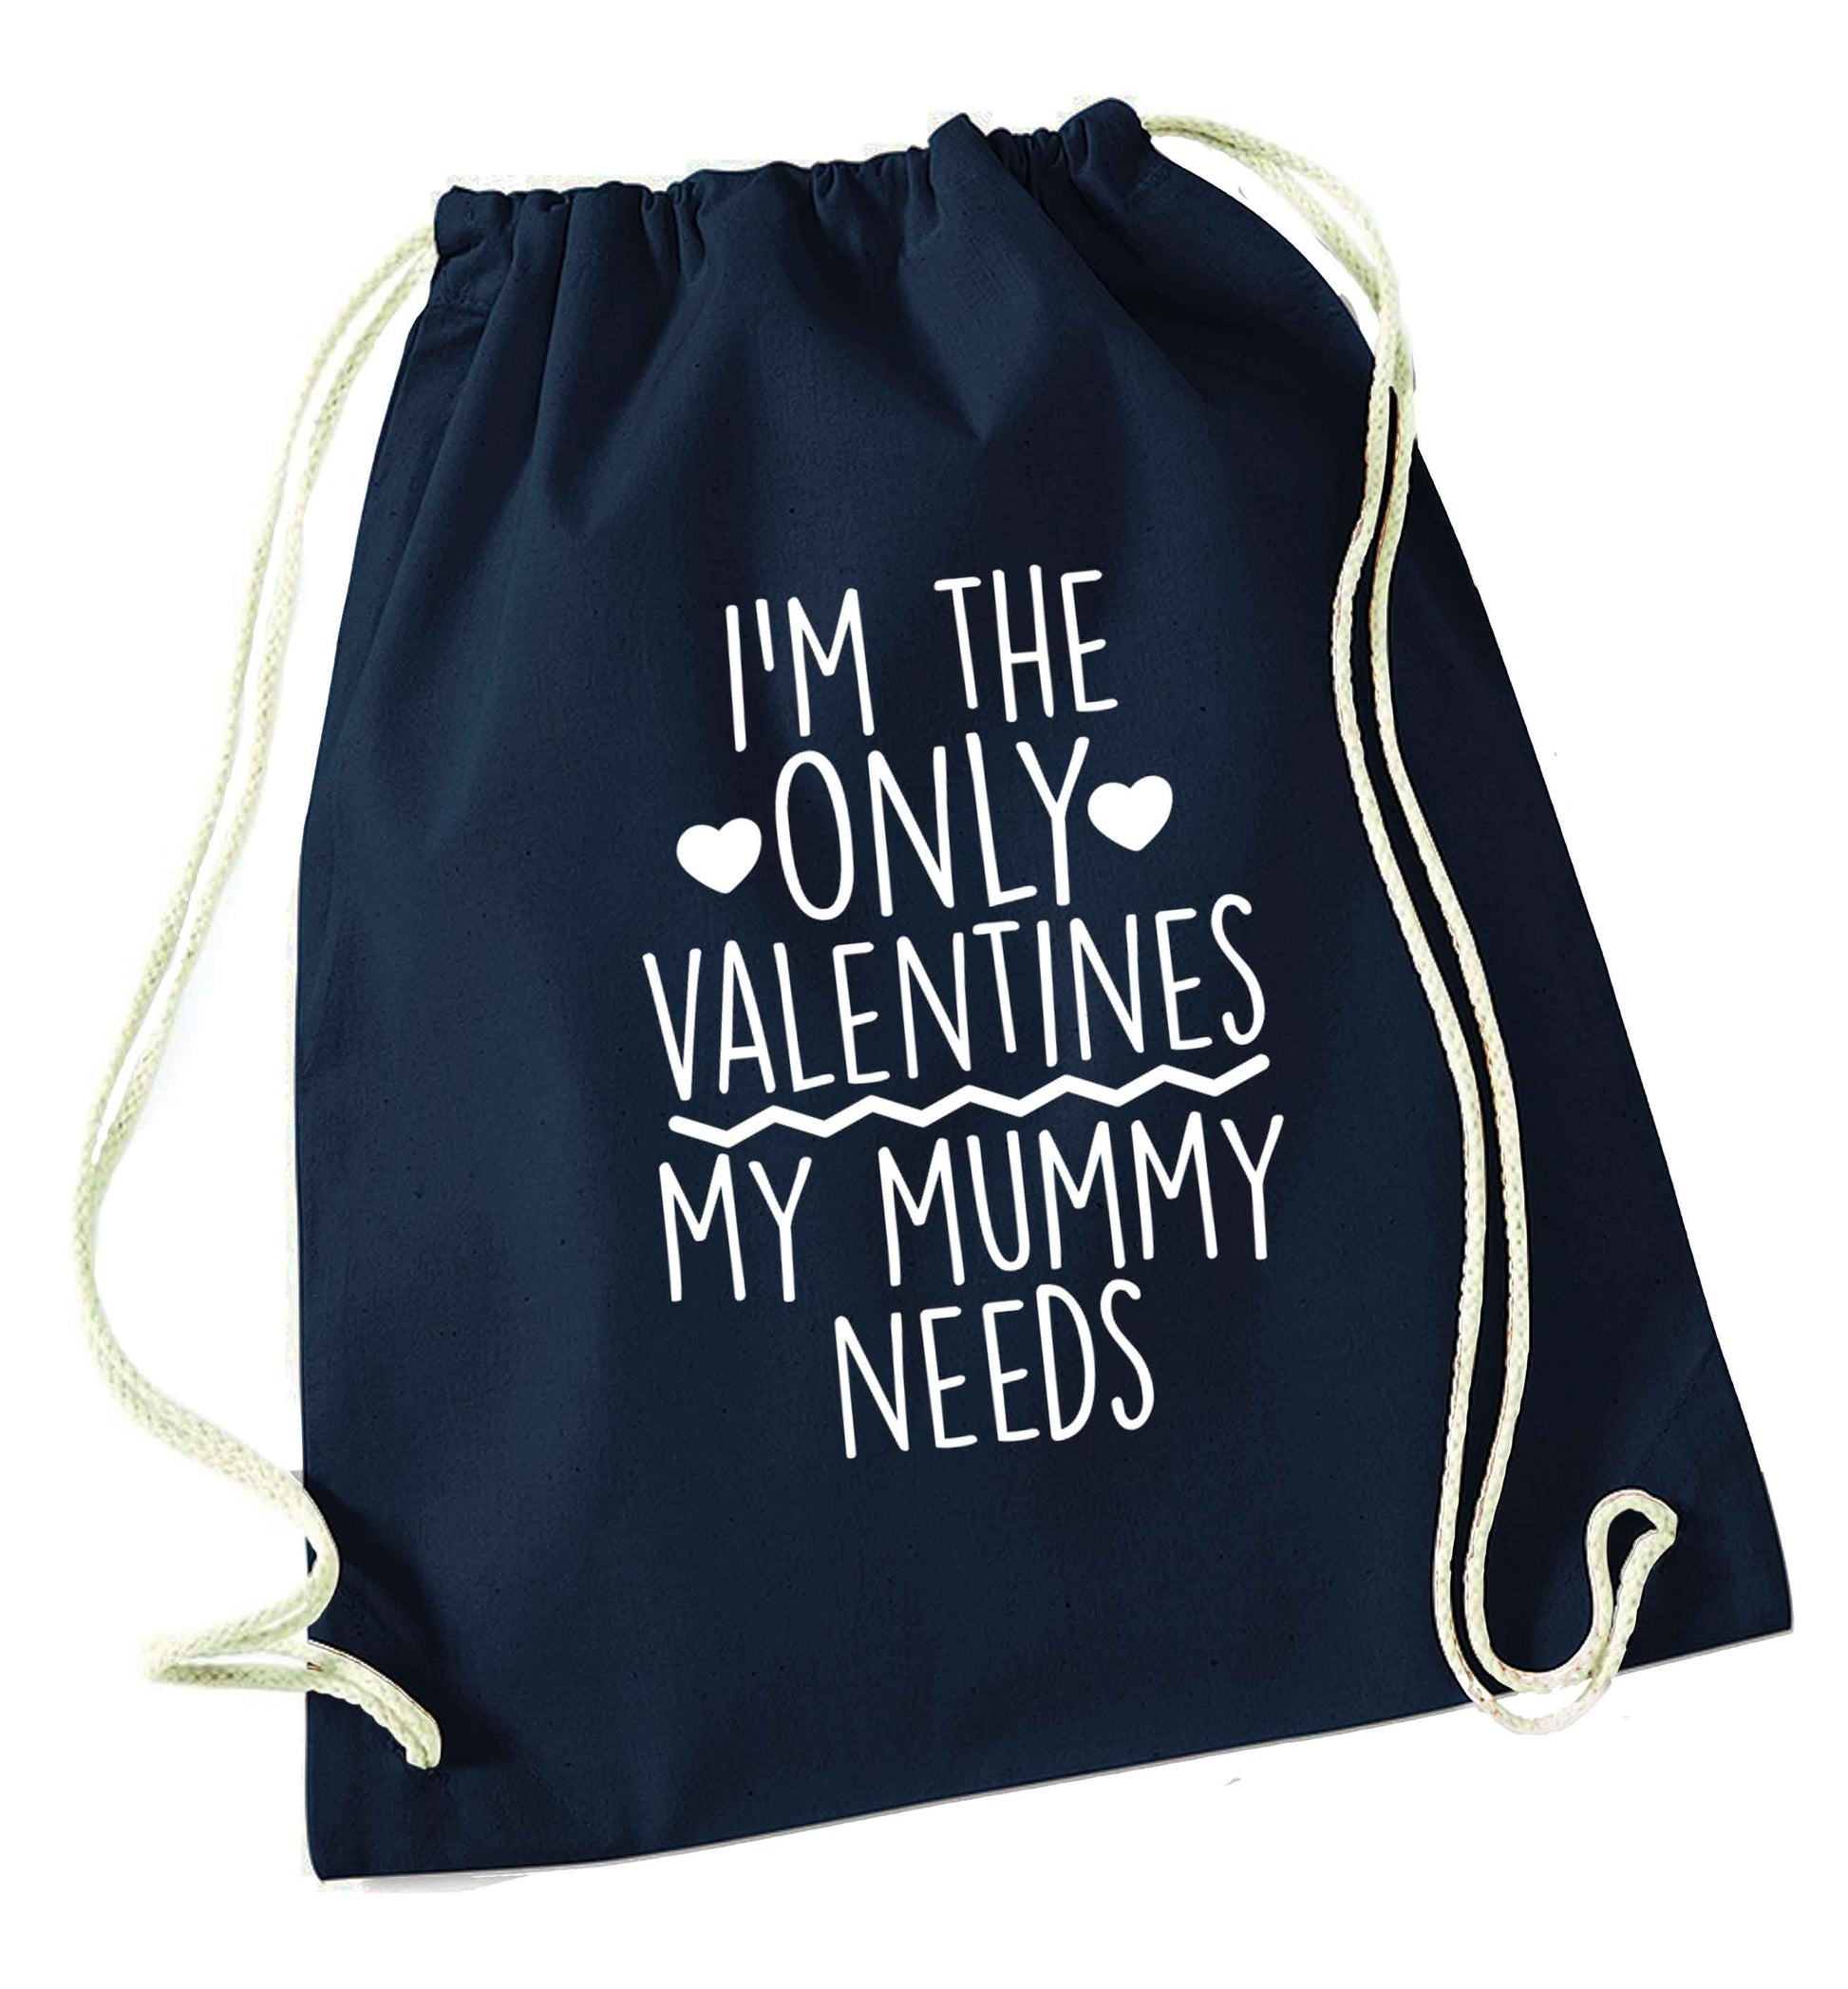 I'm the only valentines my mummy needs navy drawstring bag